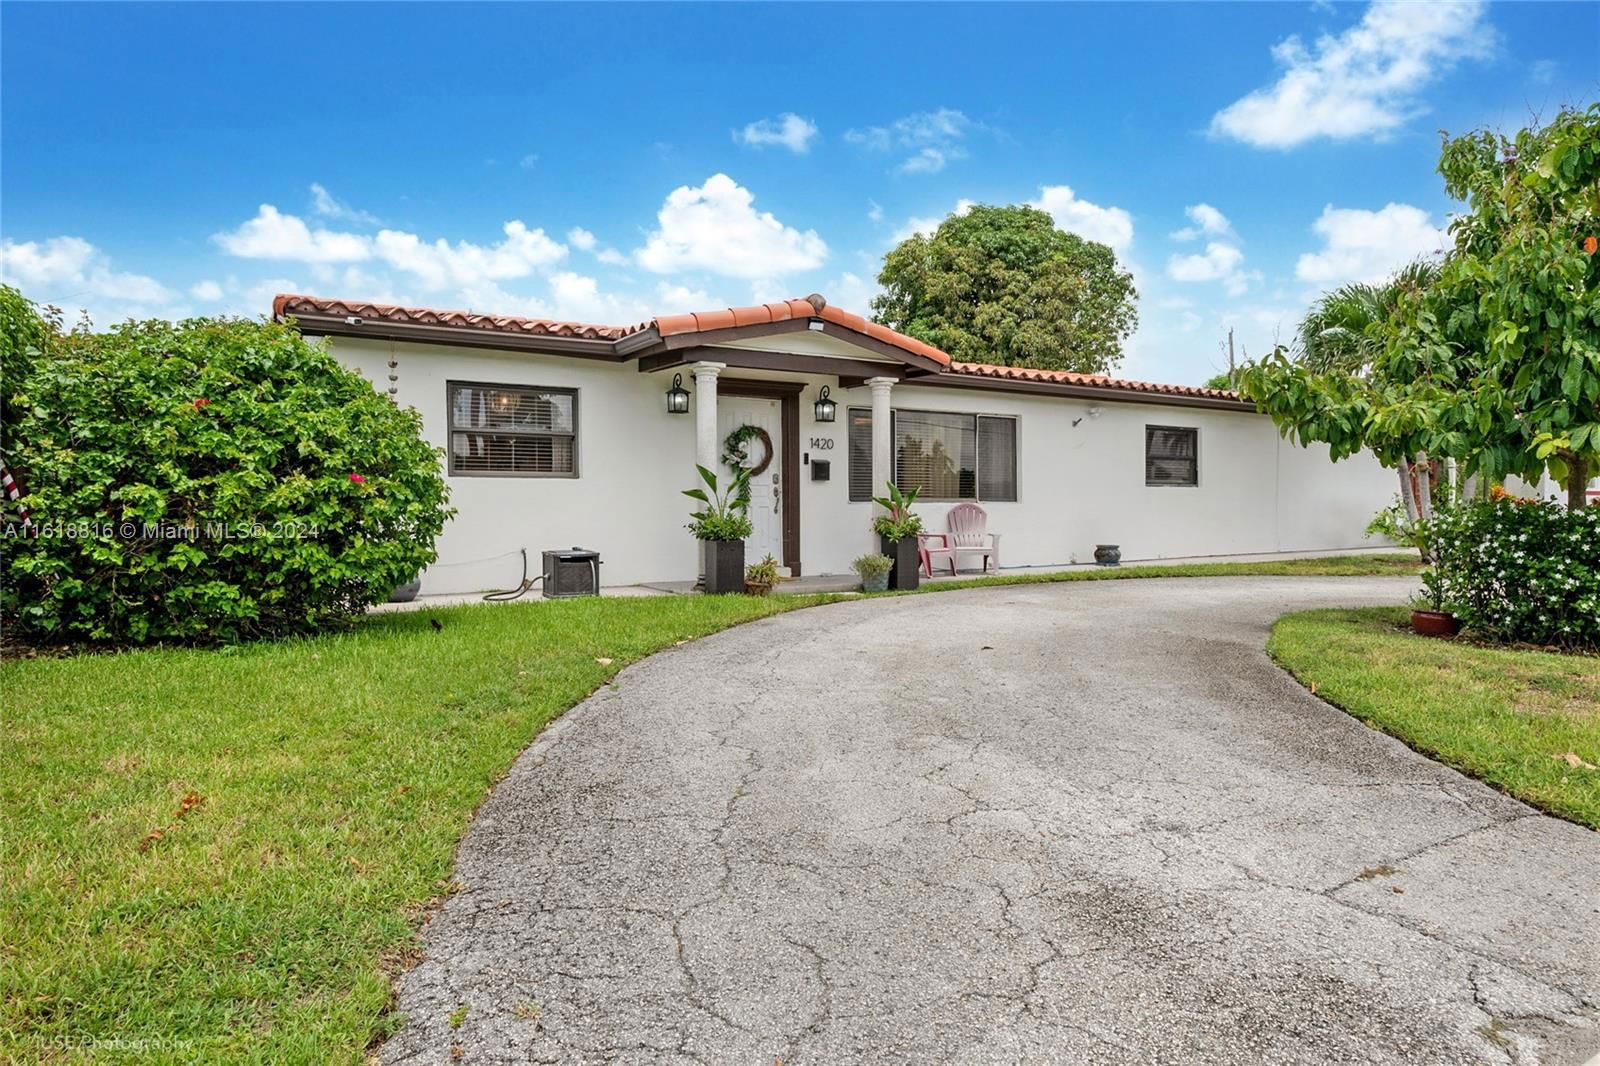 Real estate property located at 1420 91st Ave, Miami-Dade County, CORAL PARK ESTATES SEC 4, Miami, FL